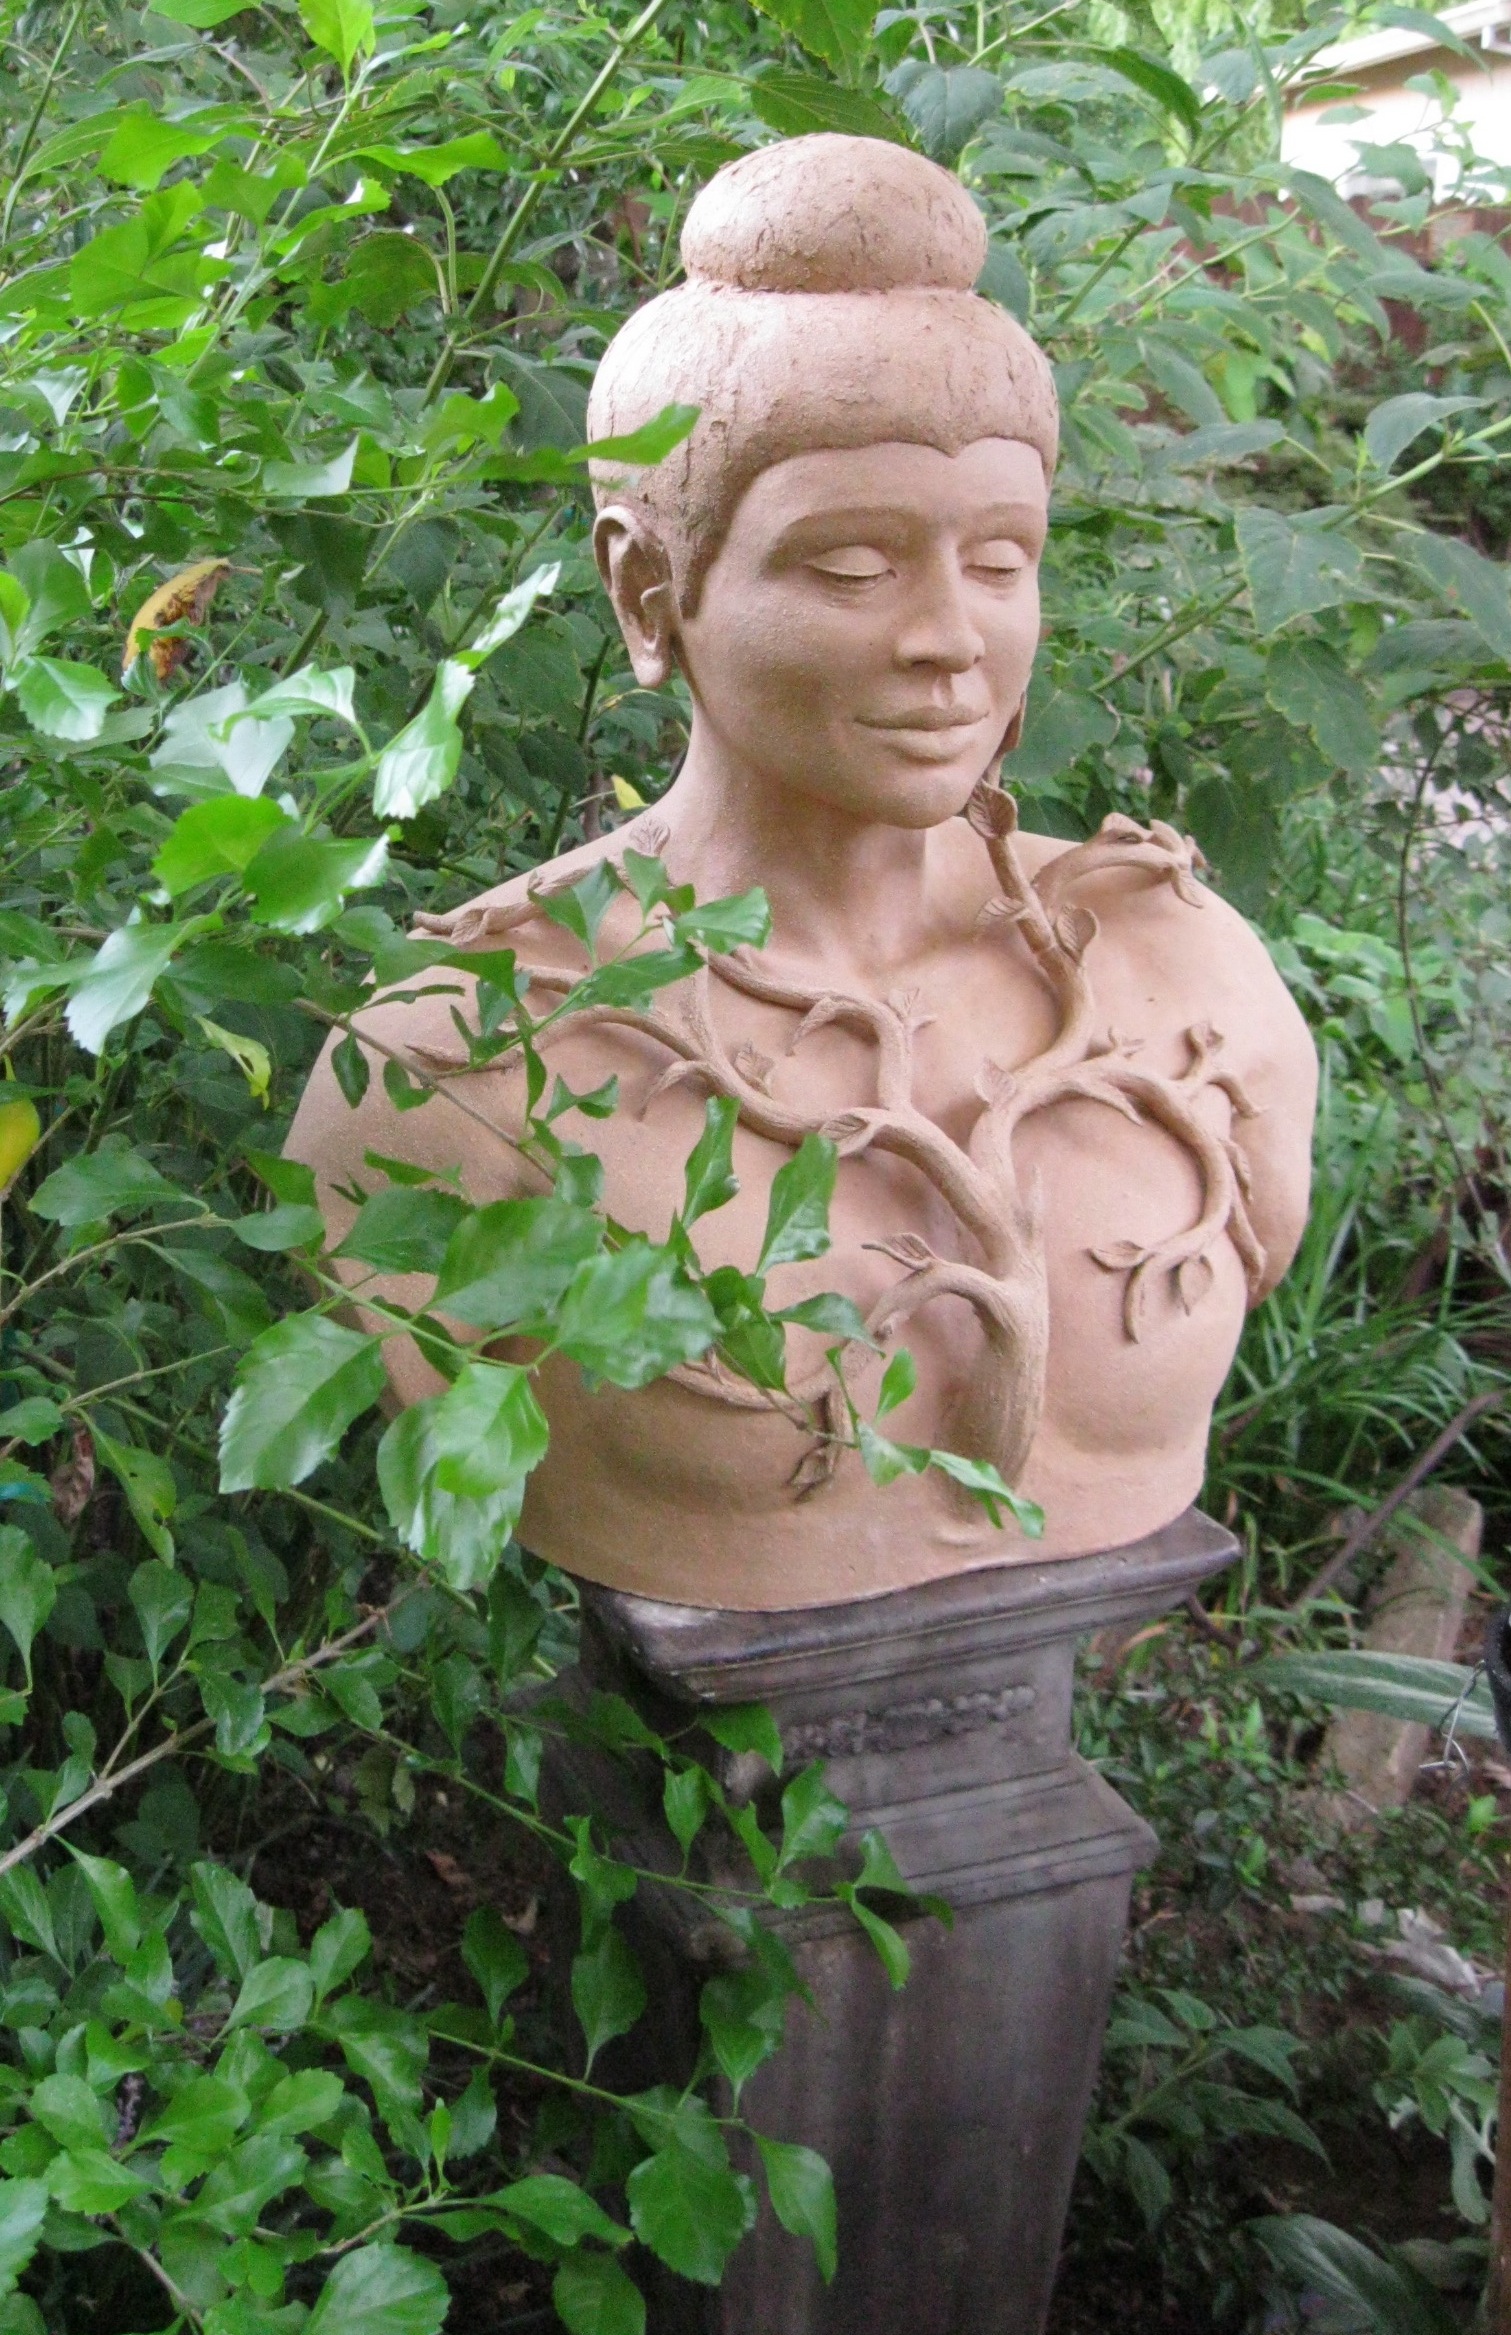 Ceramic Sculpture of Meditative Figure in Garden